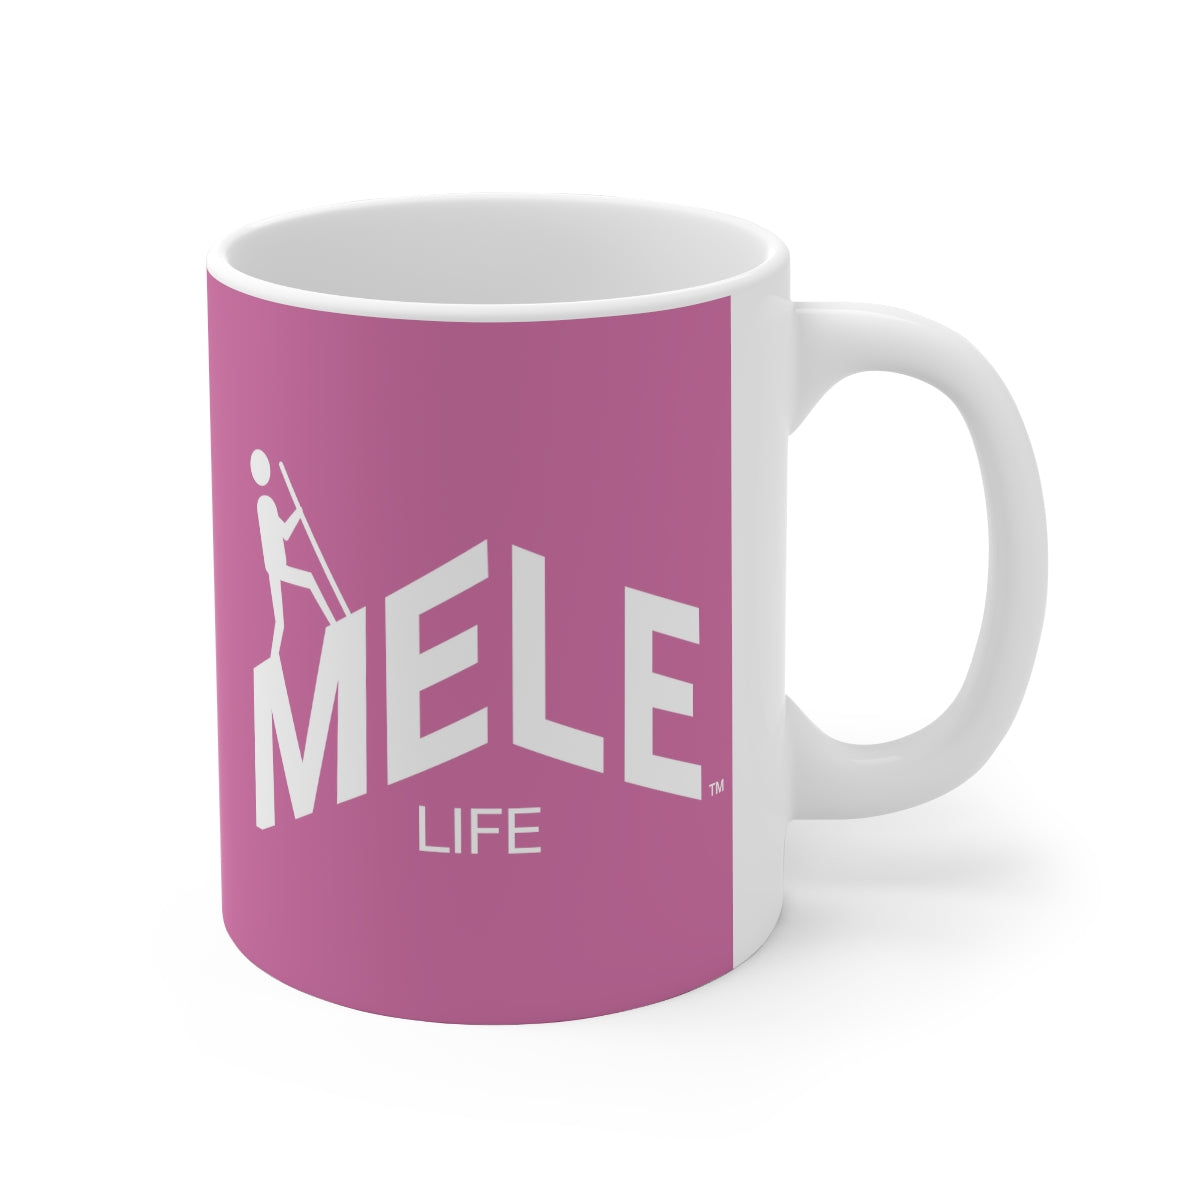 Coffee Mug - MELE LIFE   (pink)